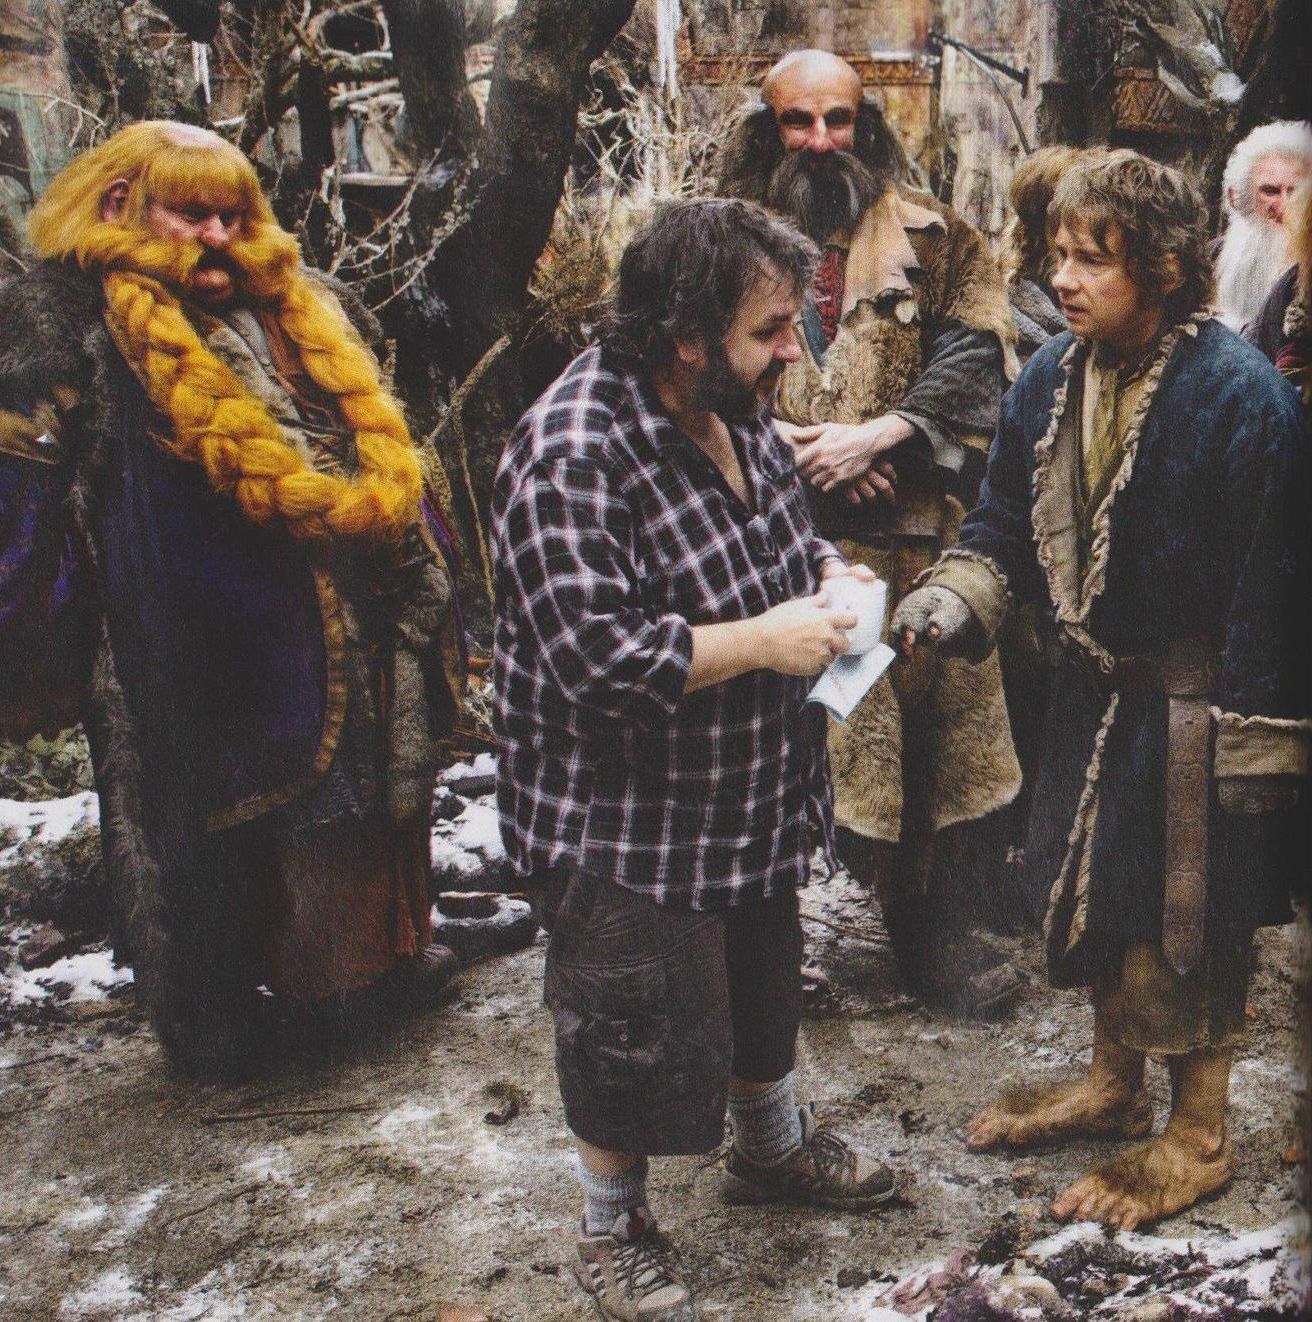 Peter Jackson on the set of the next Hobbit film